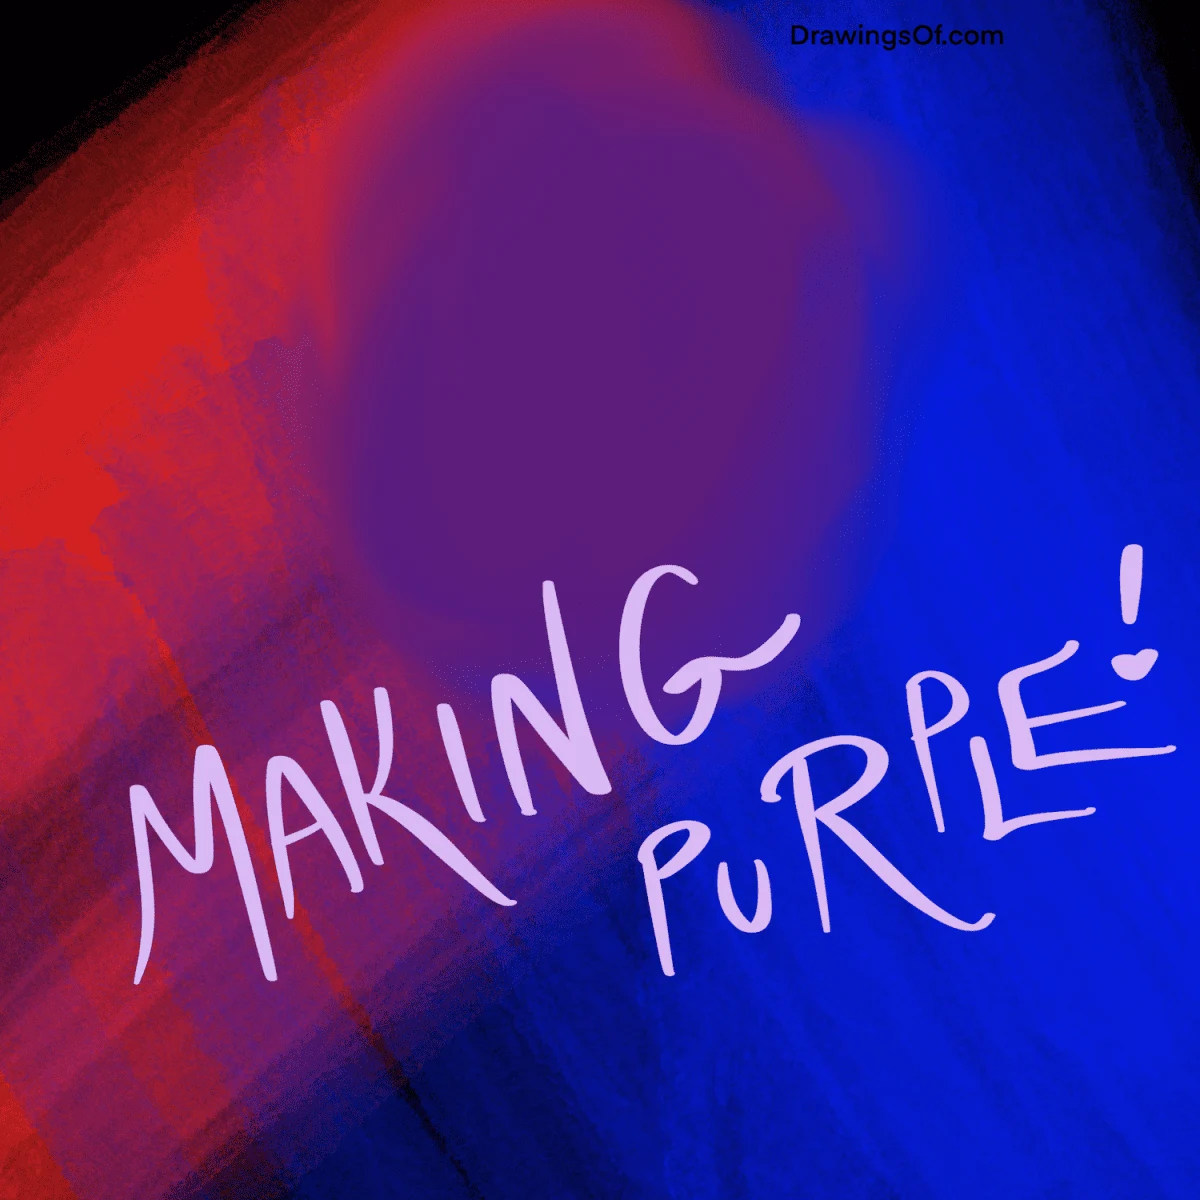 How to make purple.